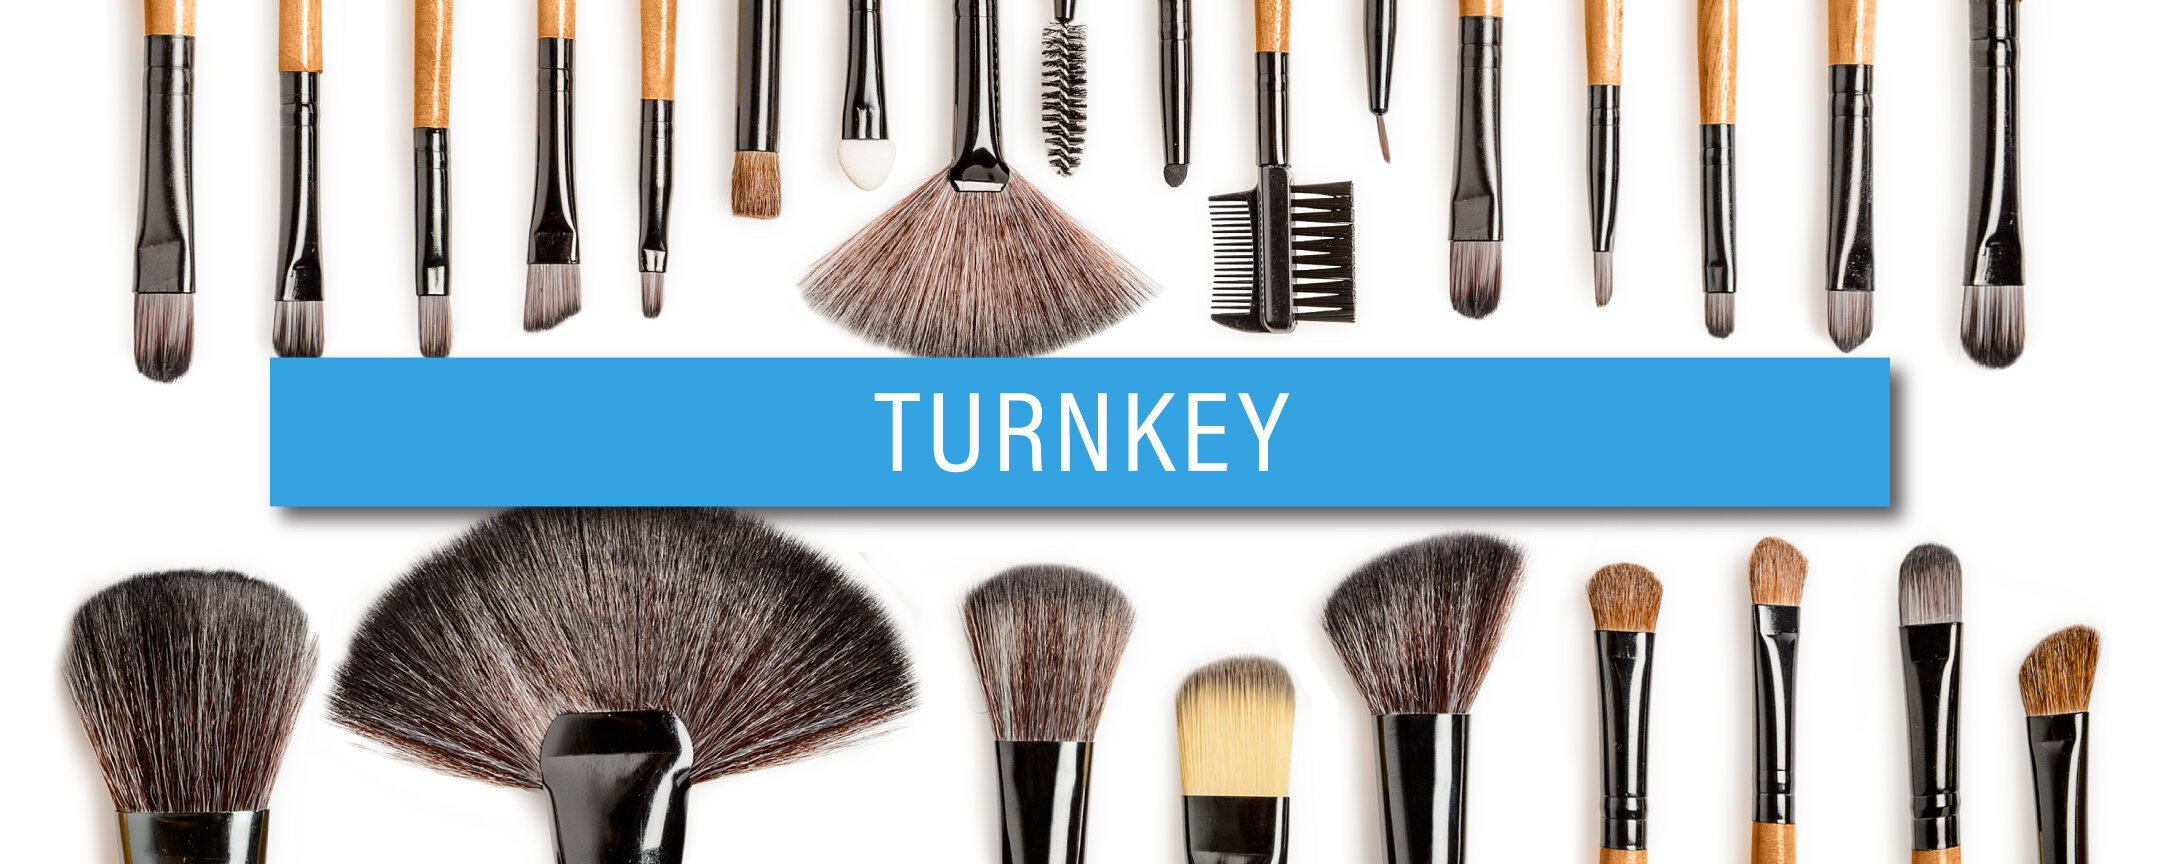 turnkey-home-gallery-brushes.jpg